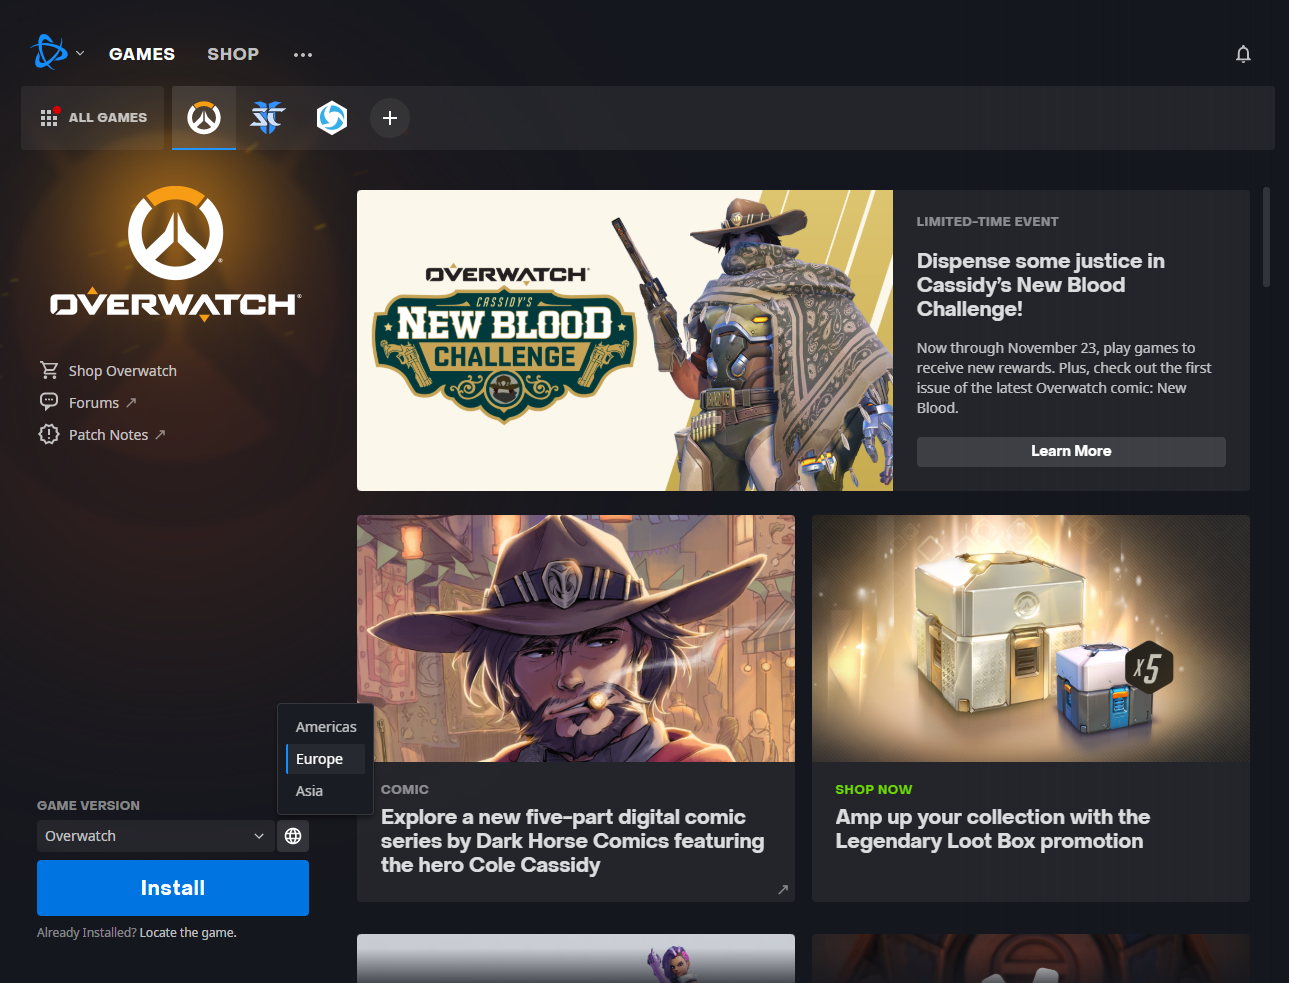 Battle.net launcher showing Overwatch game